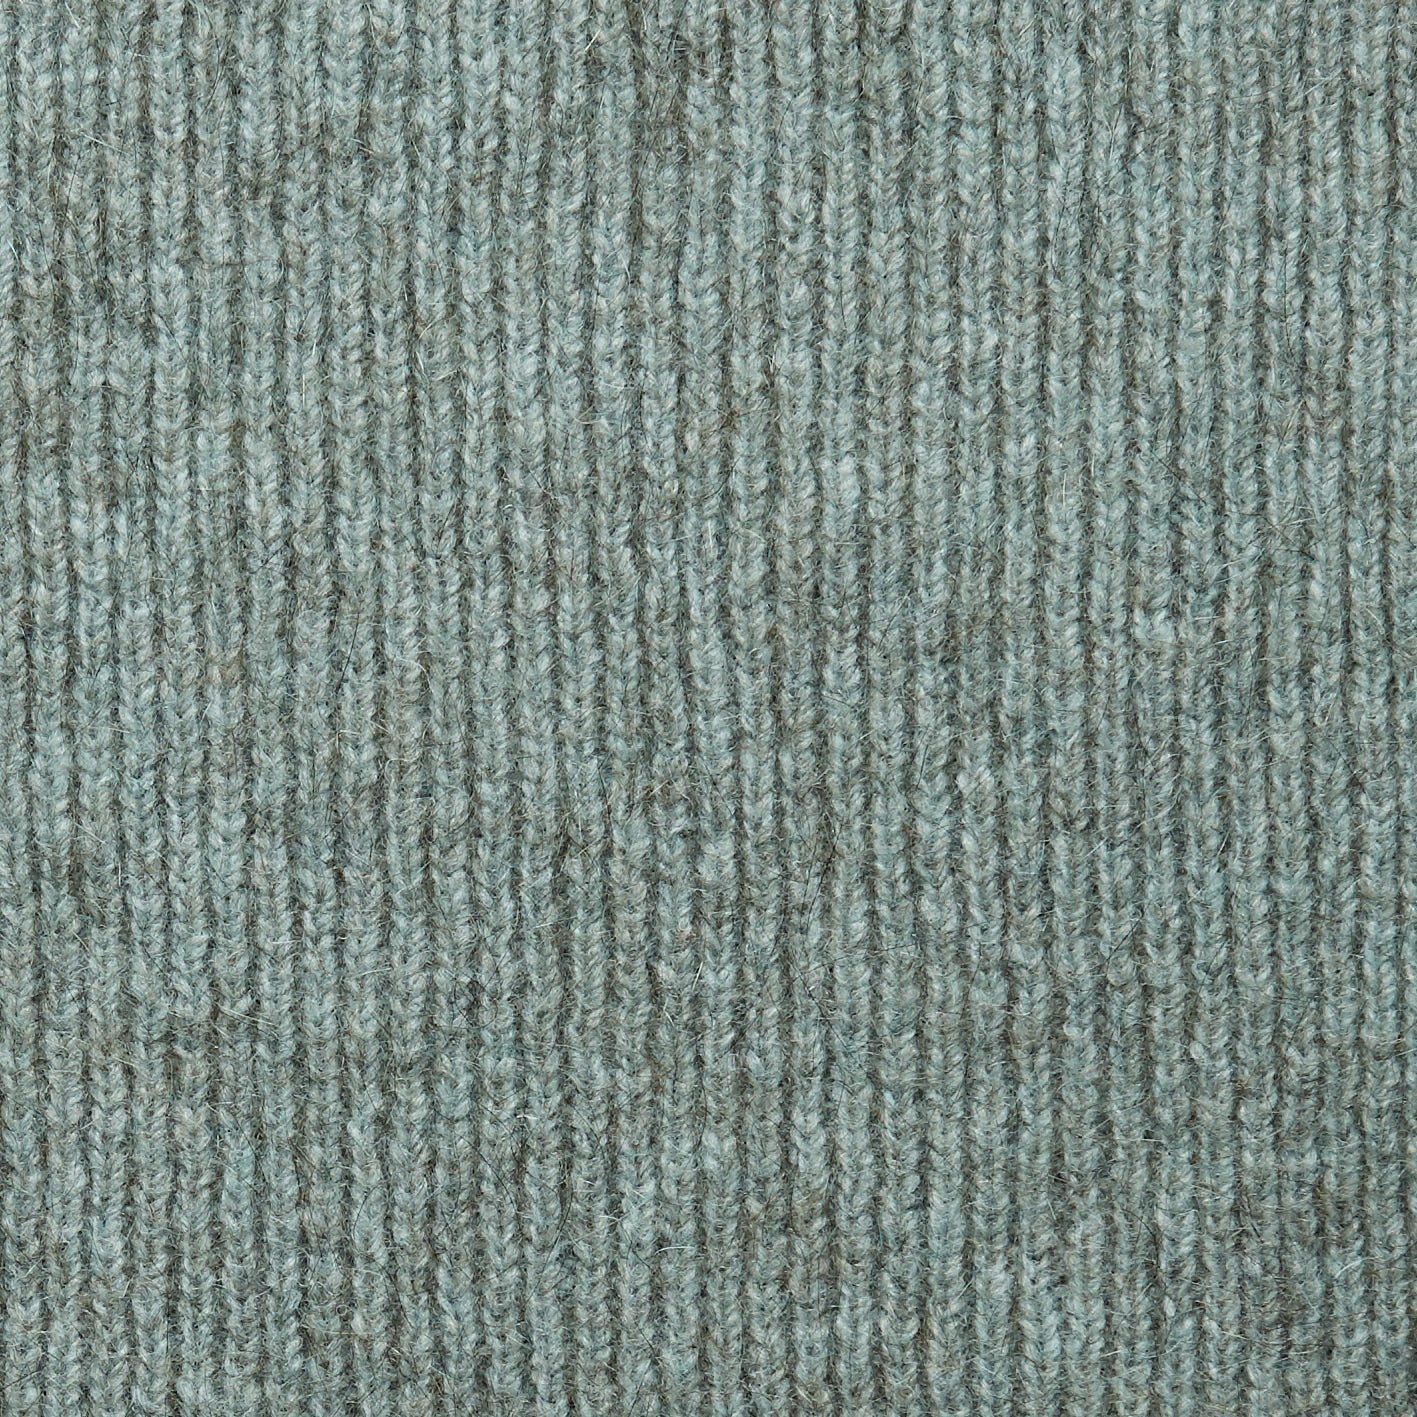 Possum Merino Garter Detail Poncho - McDonald Textiles